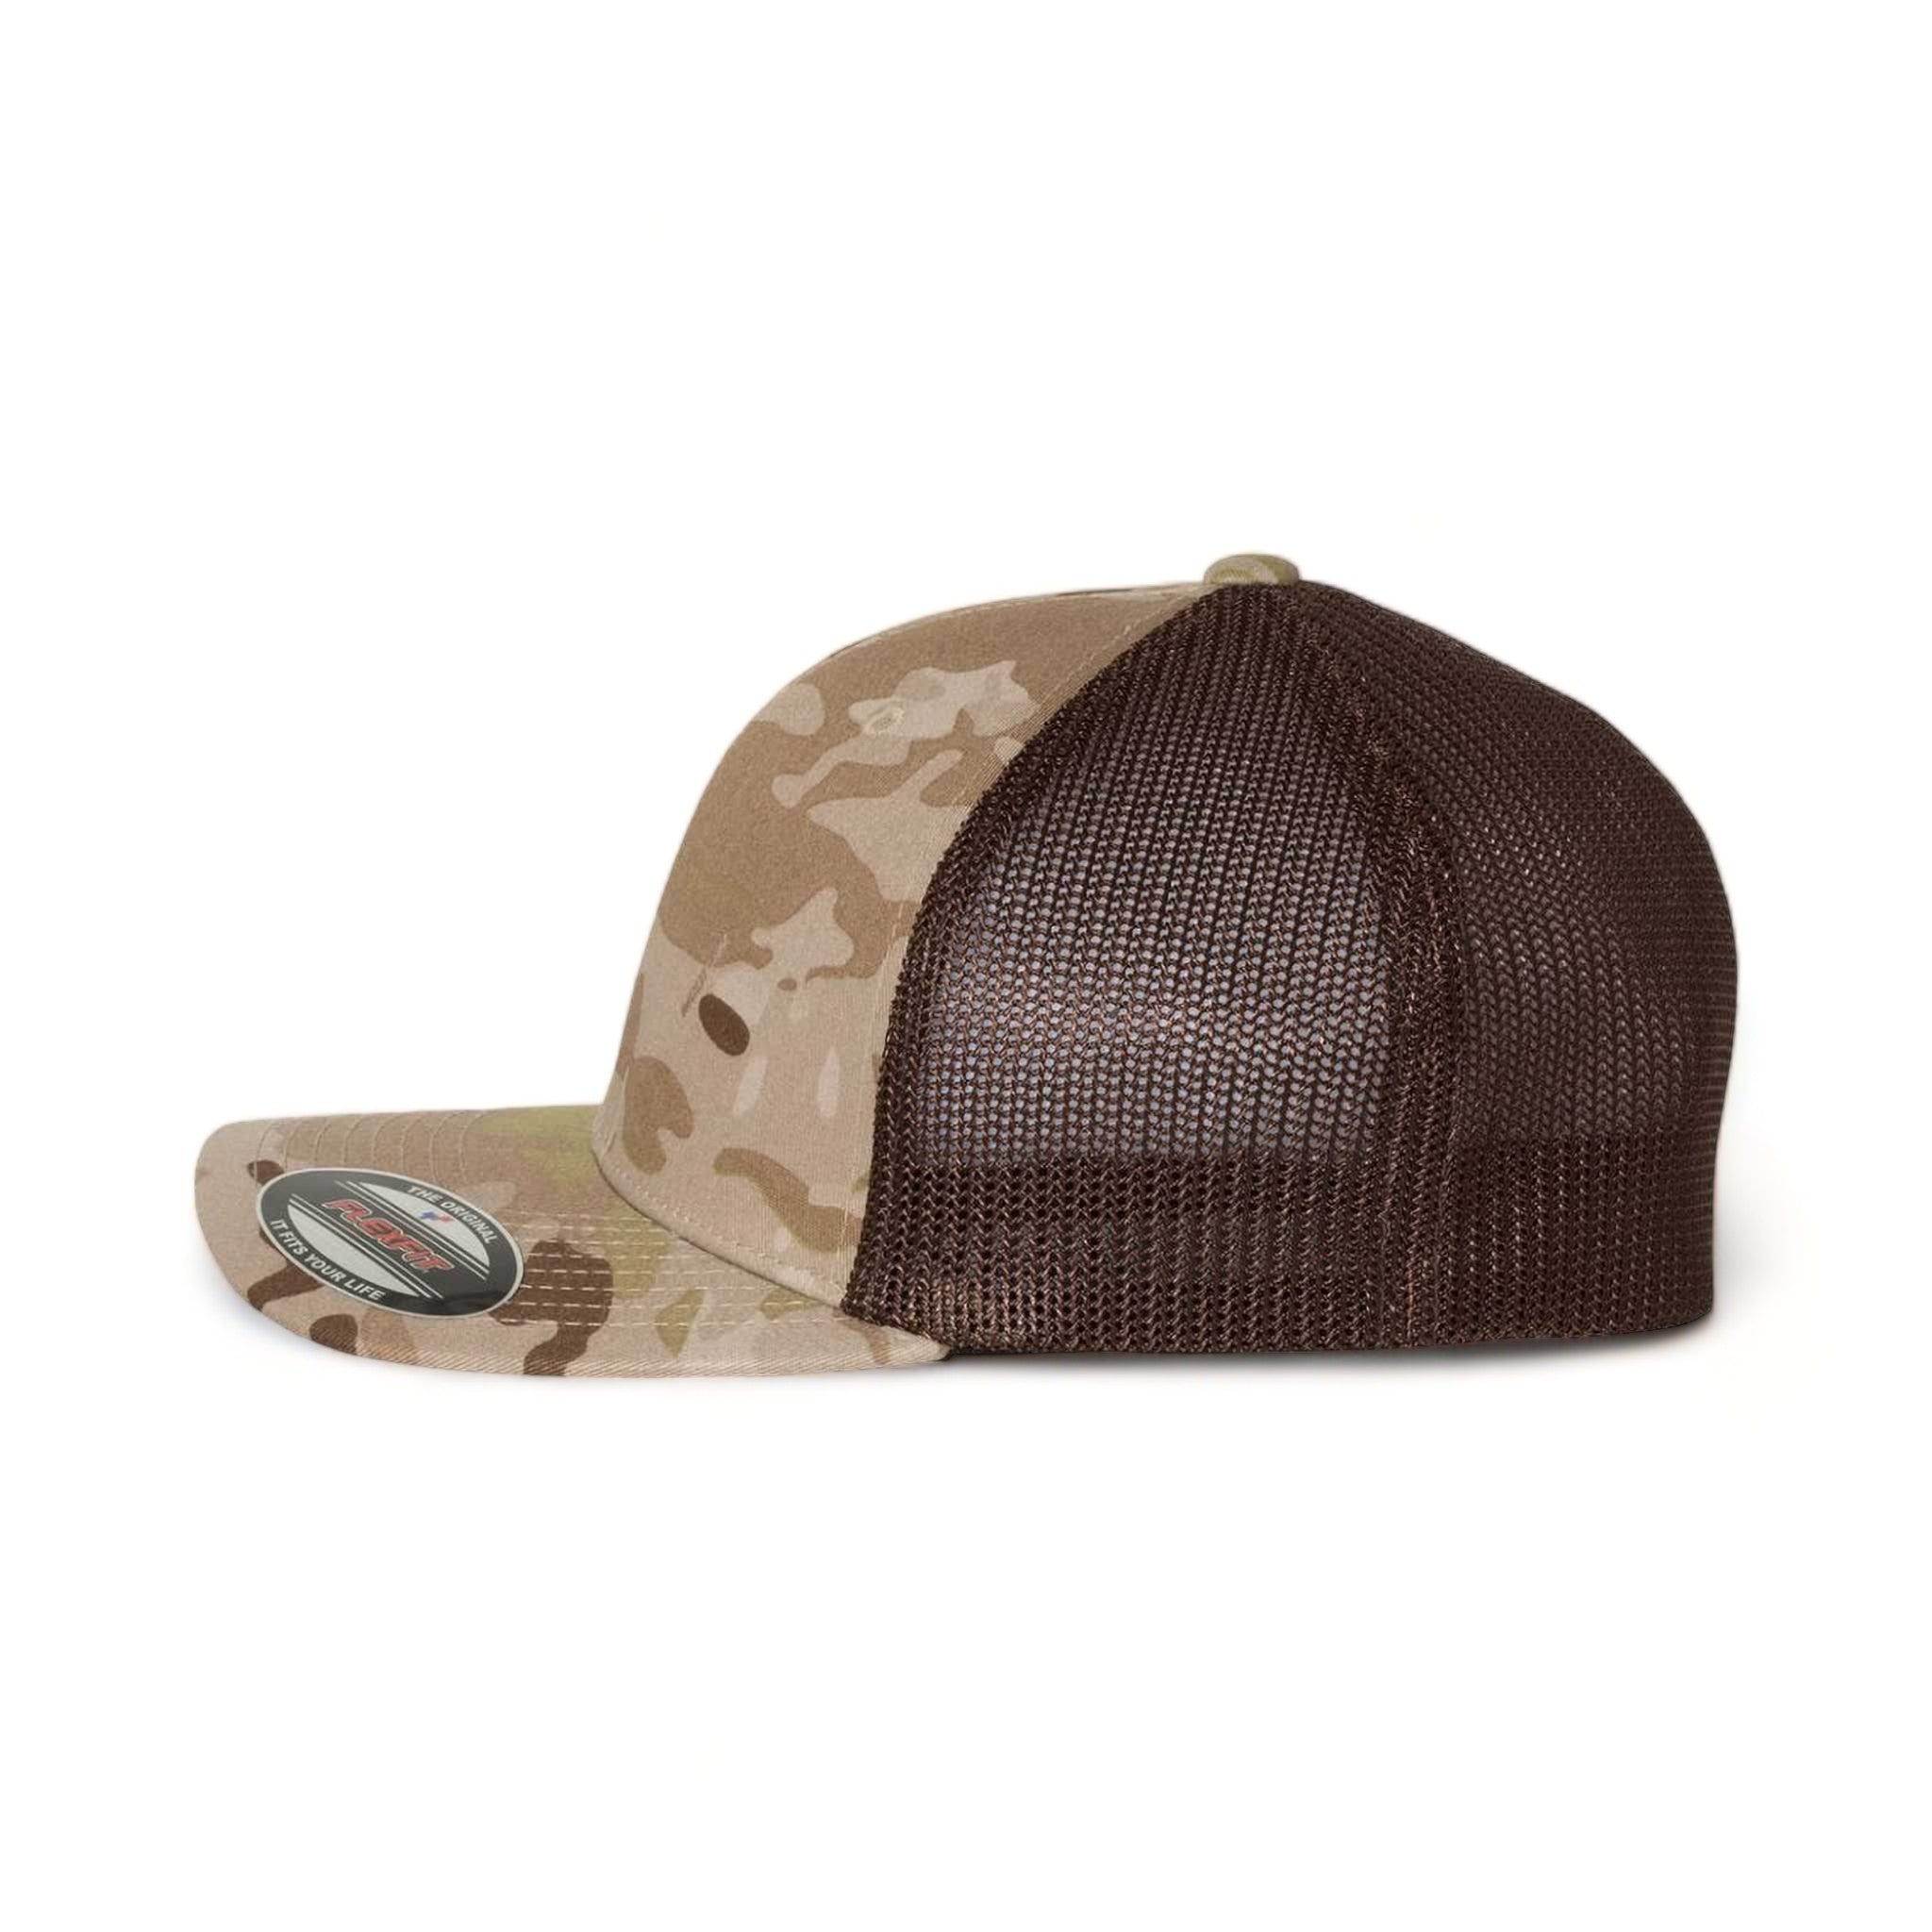 Side view of Flexfit 6511 custom hat in multicam arid and brown